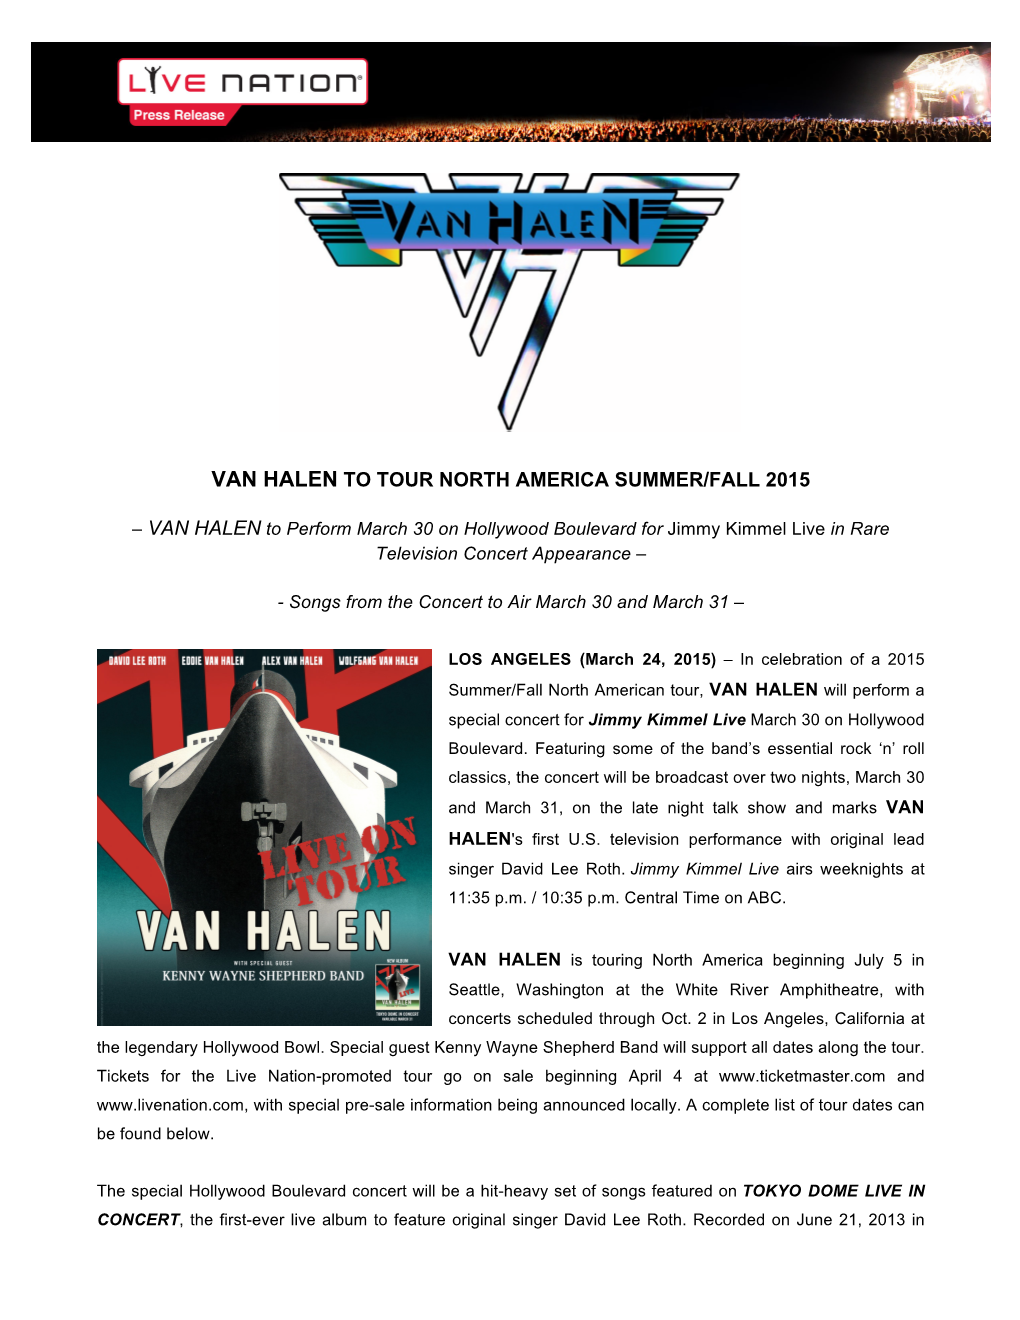 Van Halen to Tour North America Summer/Fall 2015